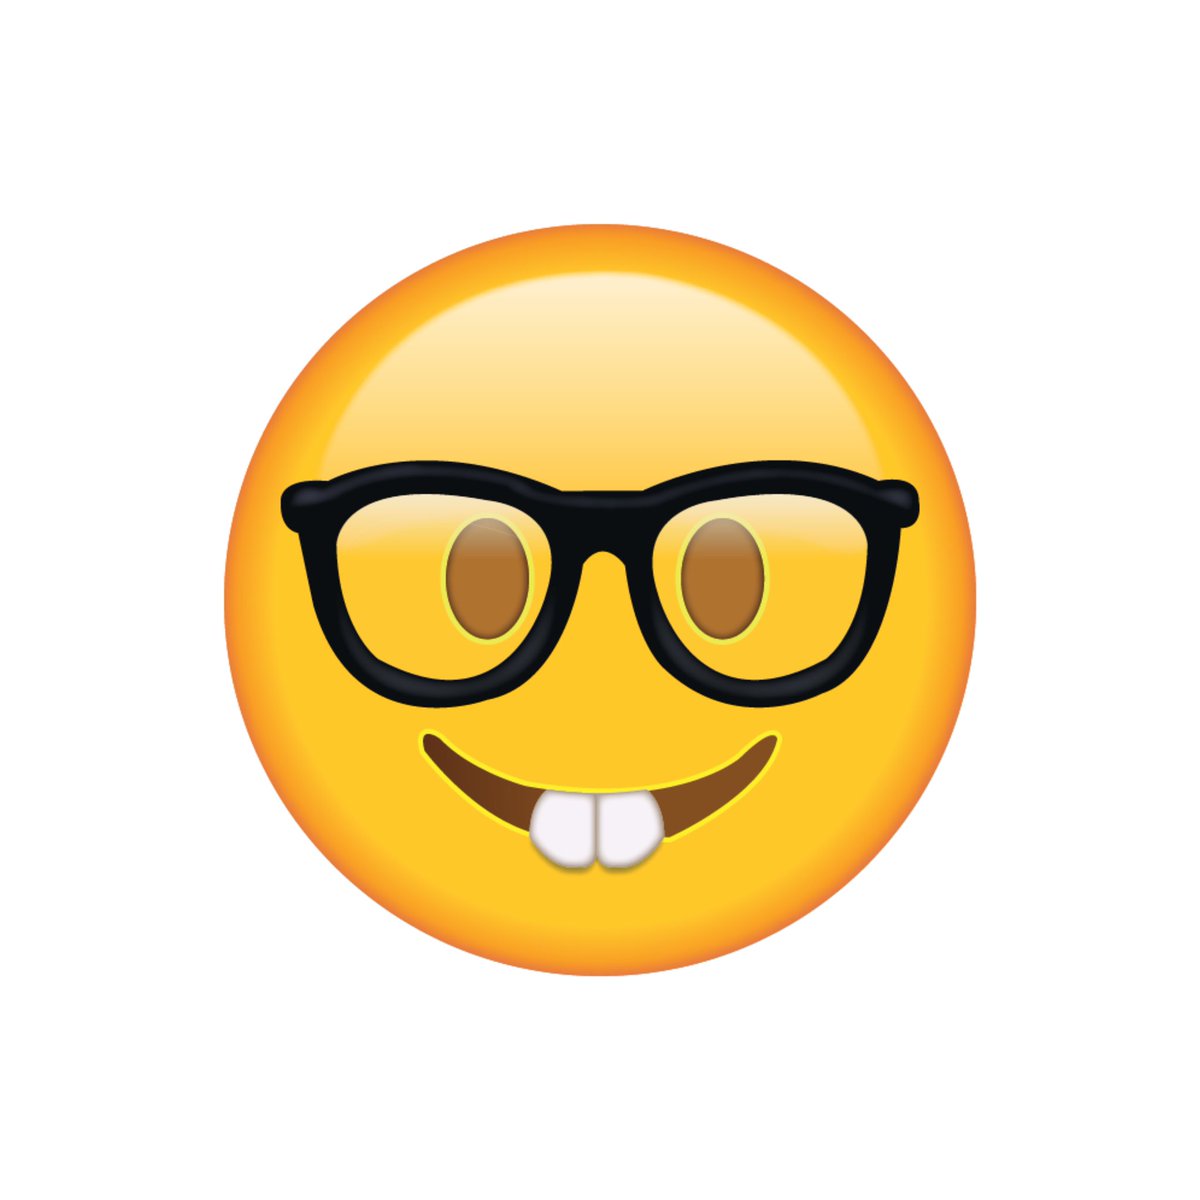 paul wesley as emojis; a thread